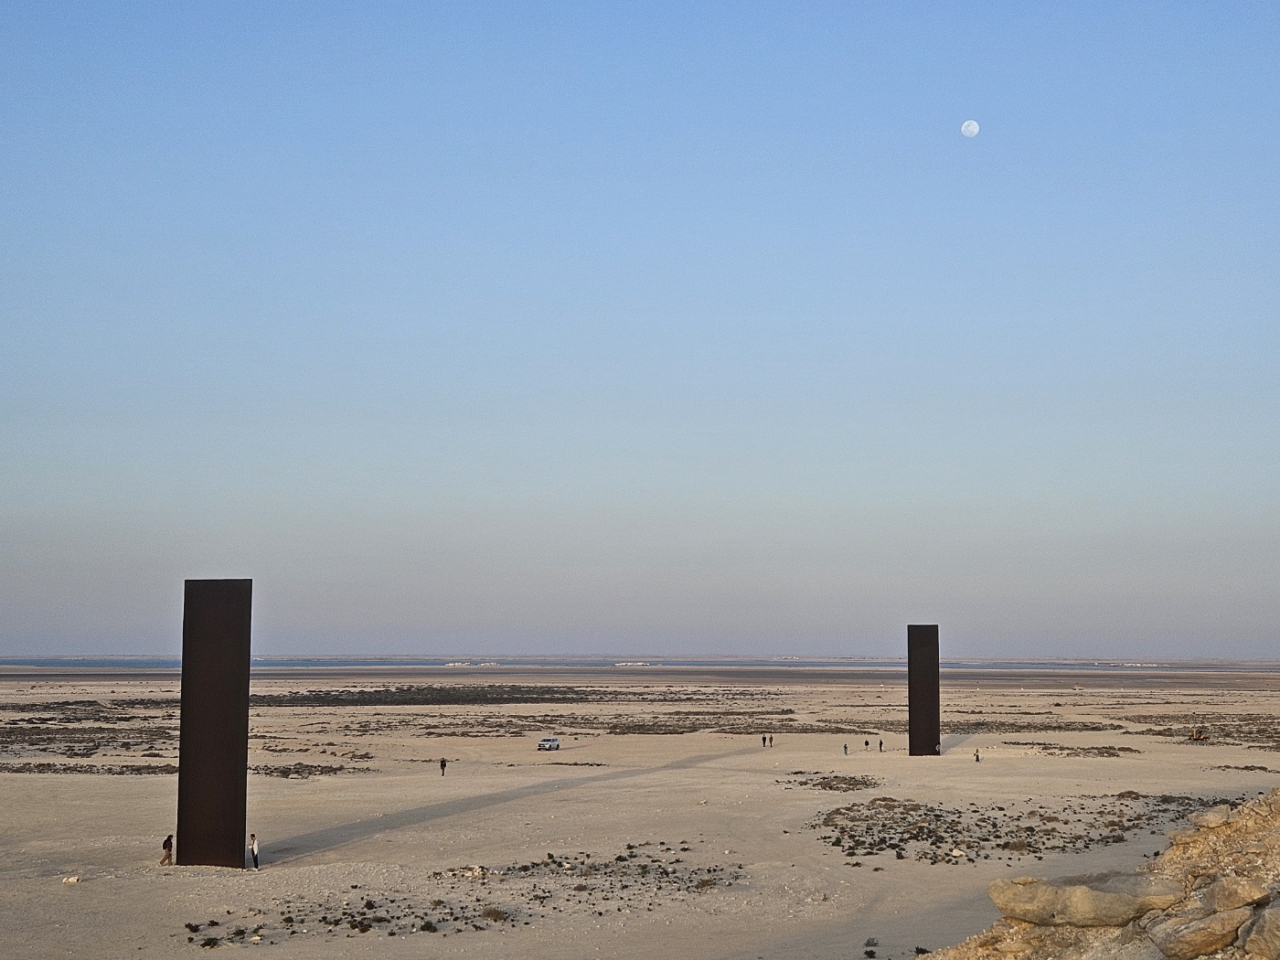 “East-West/West-East” by Richard Serra, in Qatar, Feb. 22 (Park Yuna/The Korea Herald)